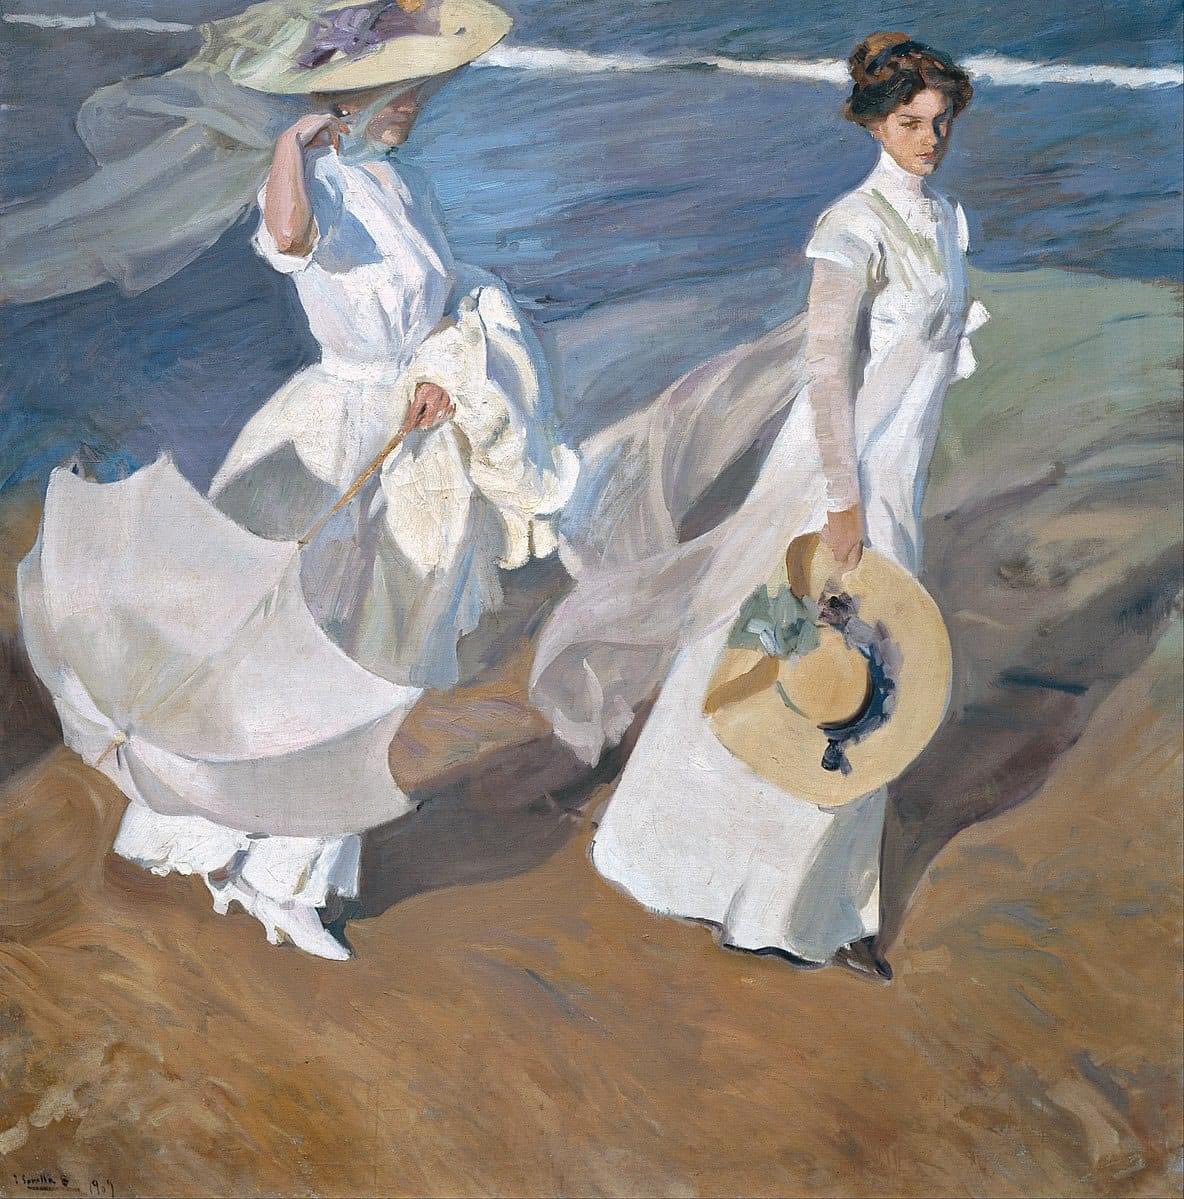 Paseo por la playa oleo sobre lienzo.
Joaquín Sorolla 1919
Museo Sorolla Madrid España